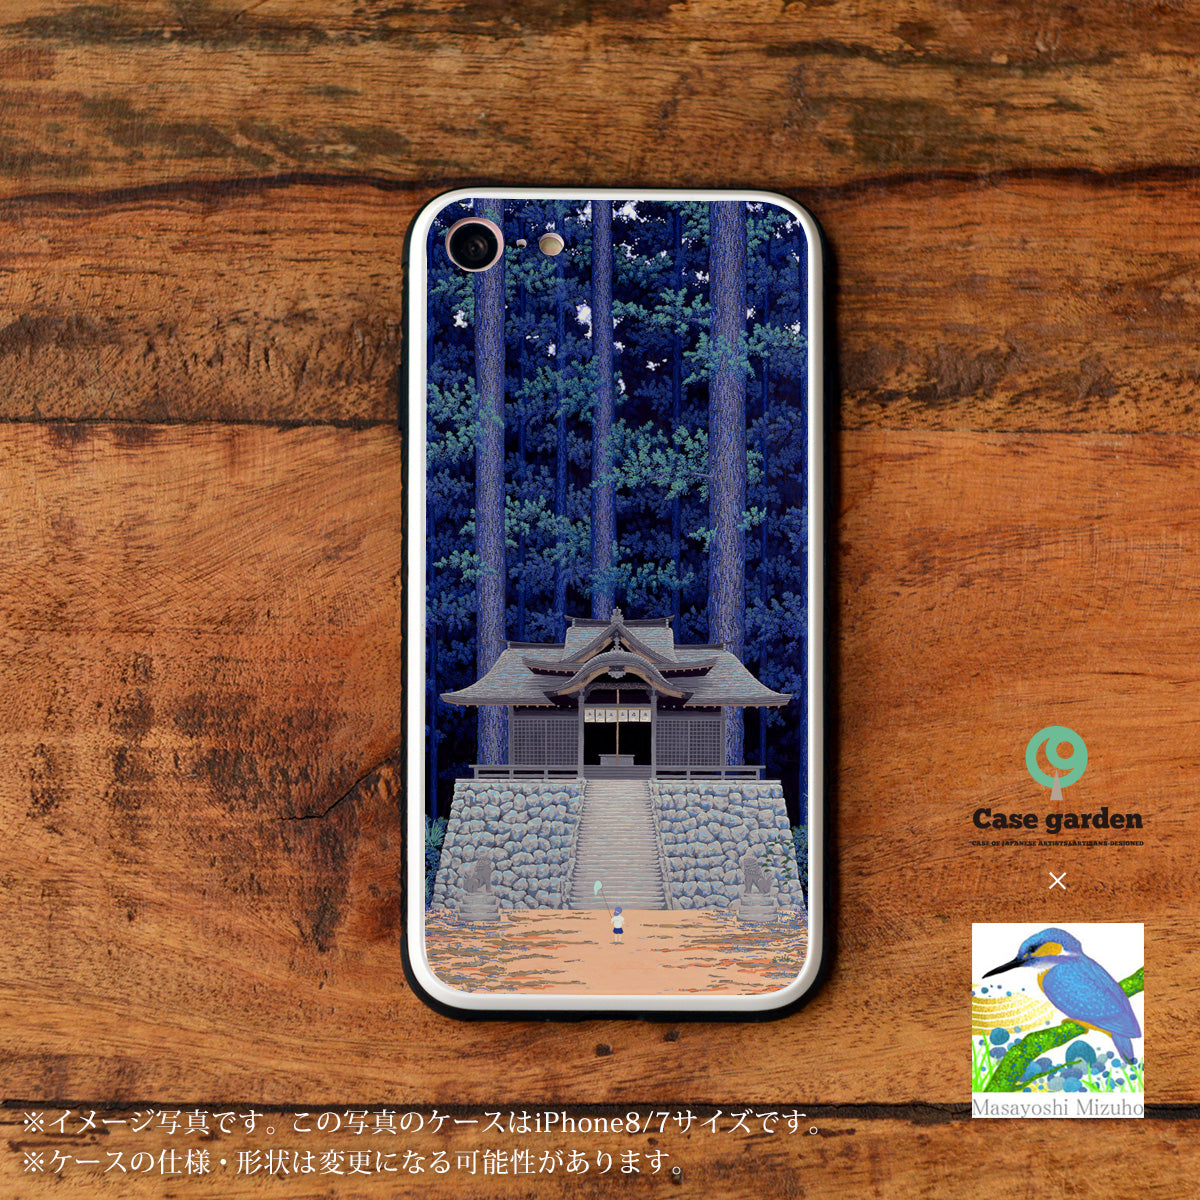 Masayoshi Mizuhoデザインの、キラキラと輝く背面カバーのガラスが美しいラウンド型強化ガラススマホケース「鎮守の森」です。写真の機種はiPhoneXRです。